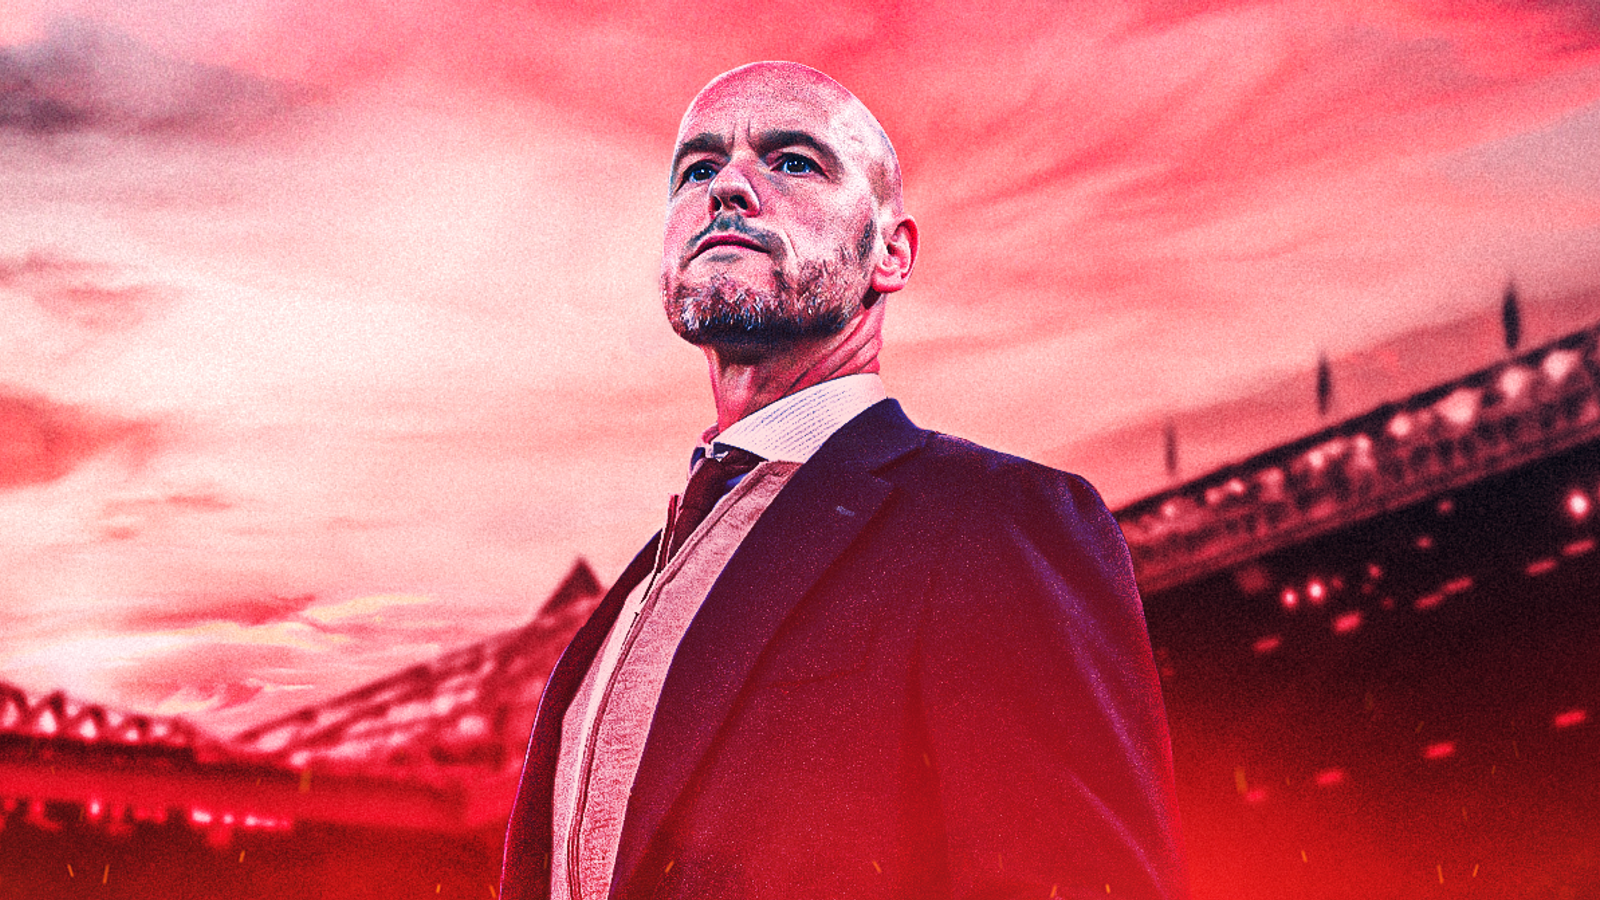 Erik ten Hag: Inside Manchester United manager’s ‘intense’ first week of pre-season